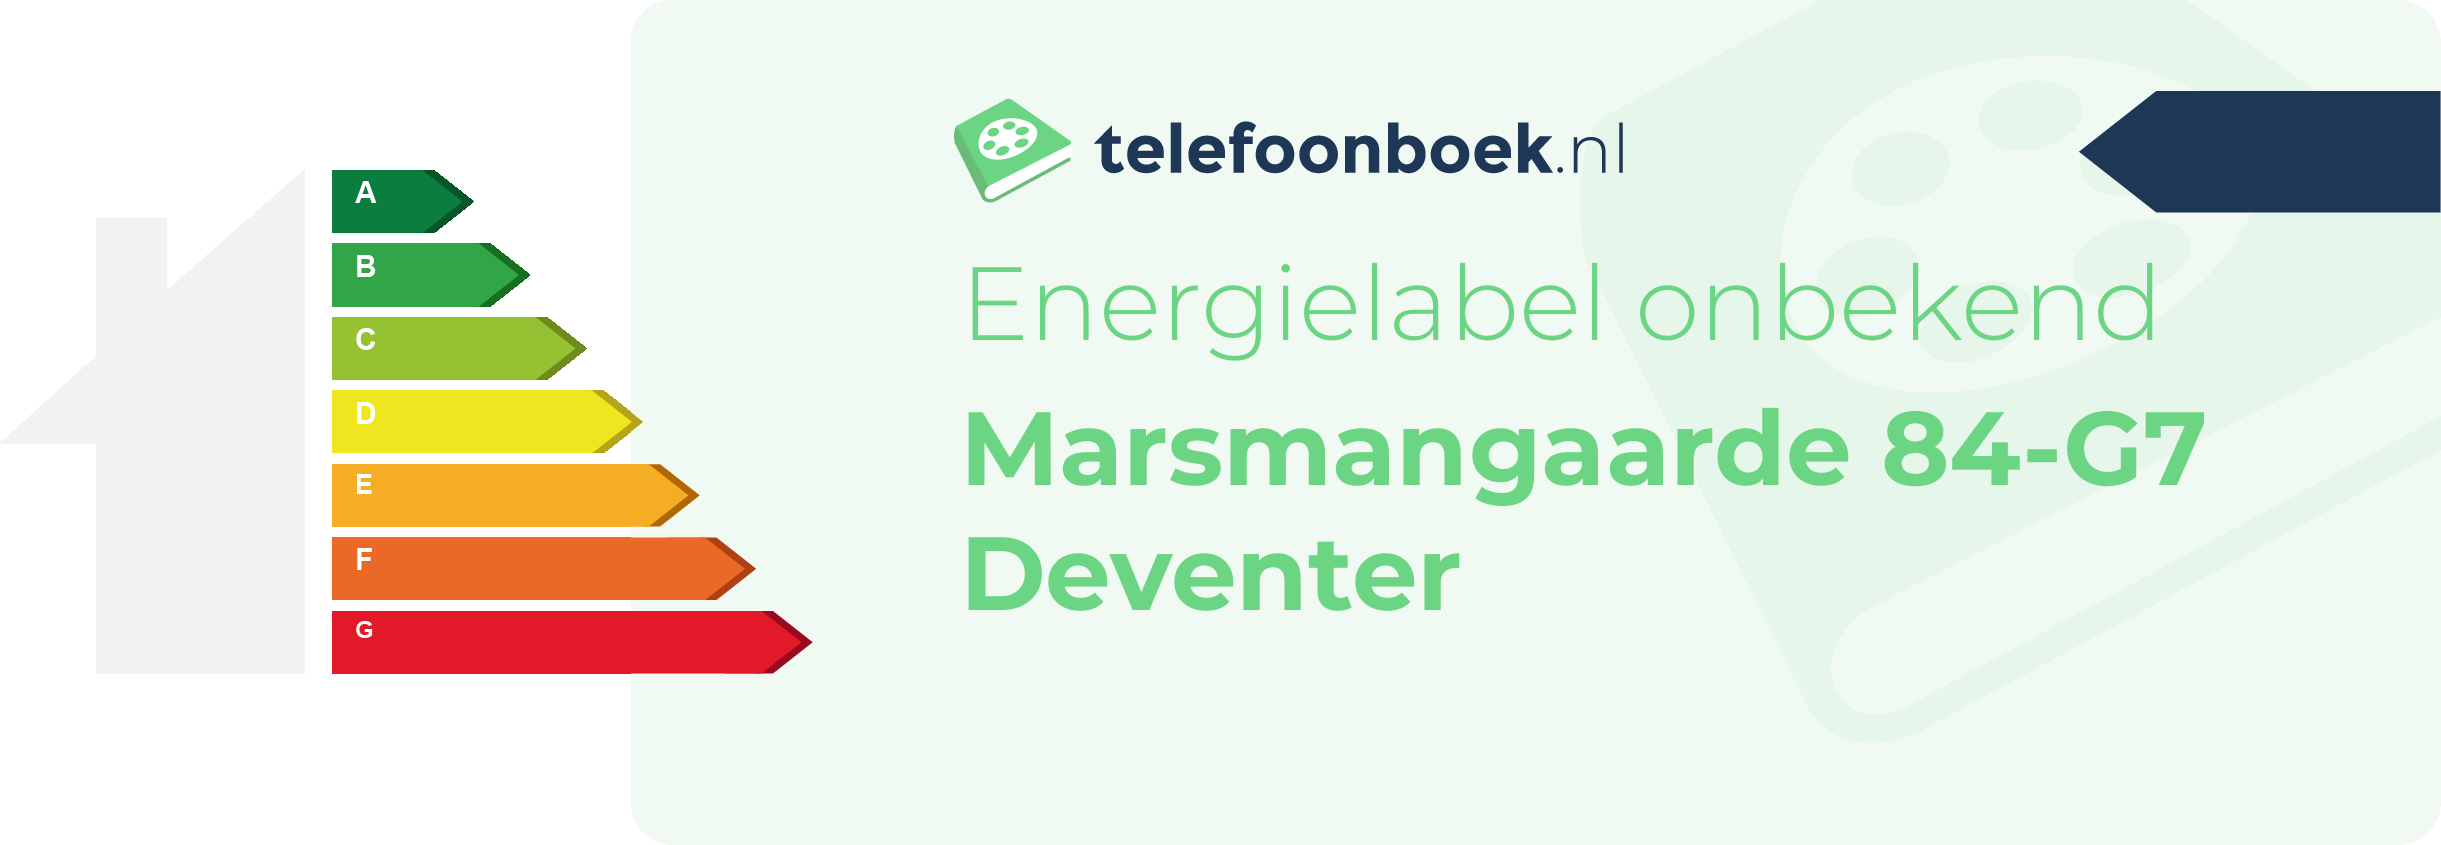 Energielabel Marsmangaarde 84-G7 Deventer